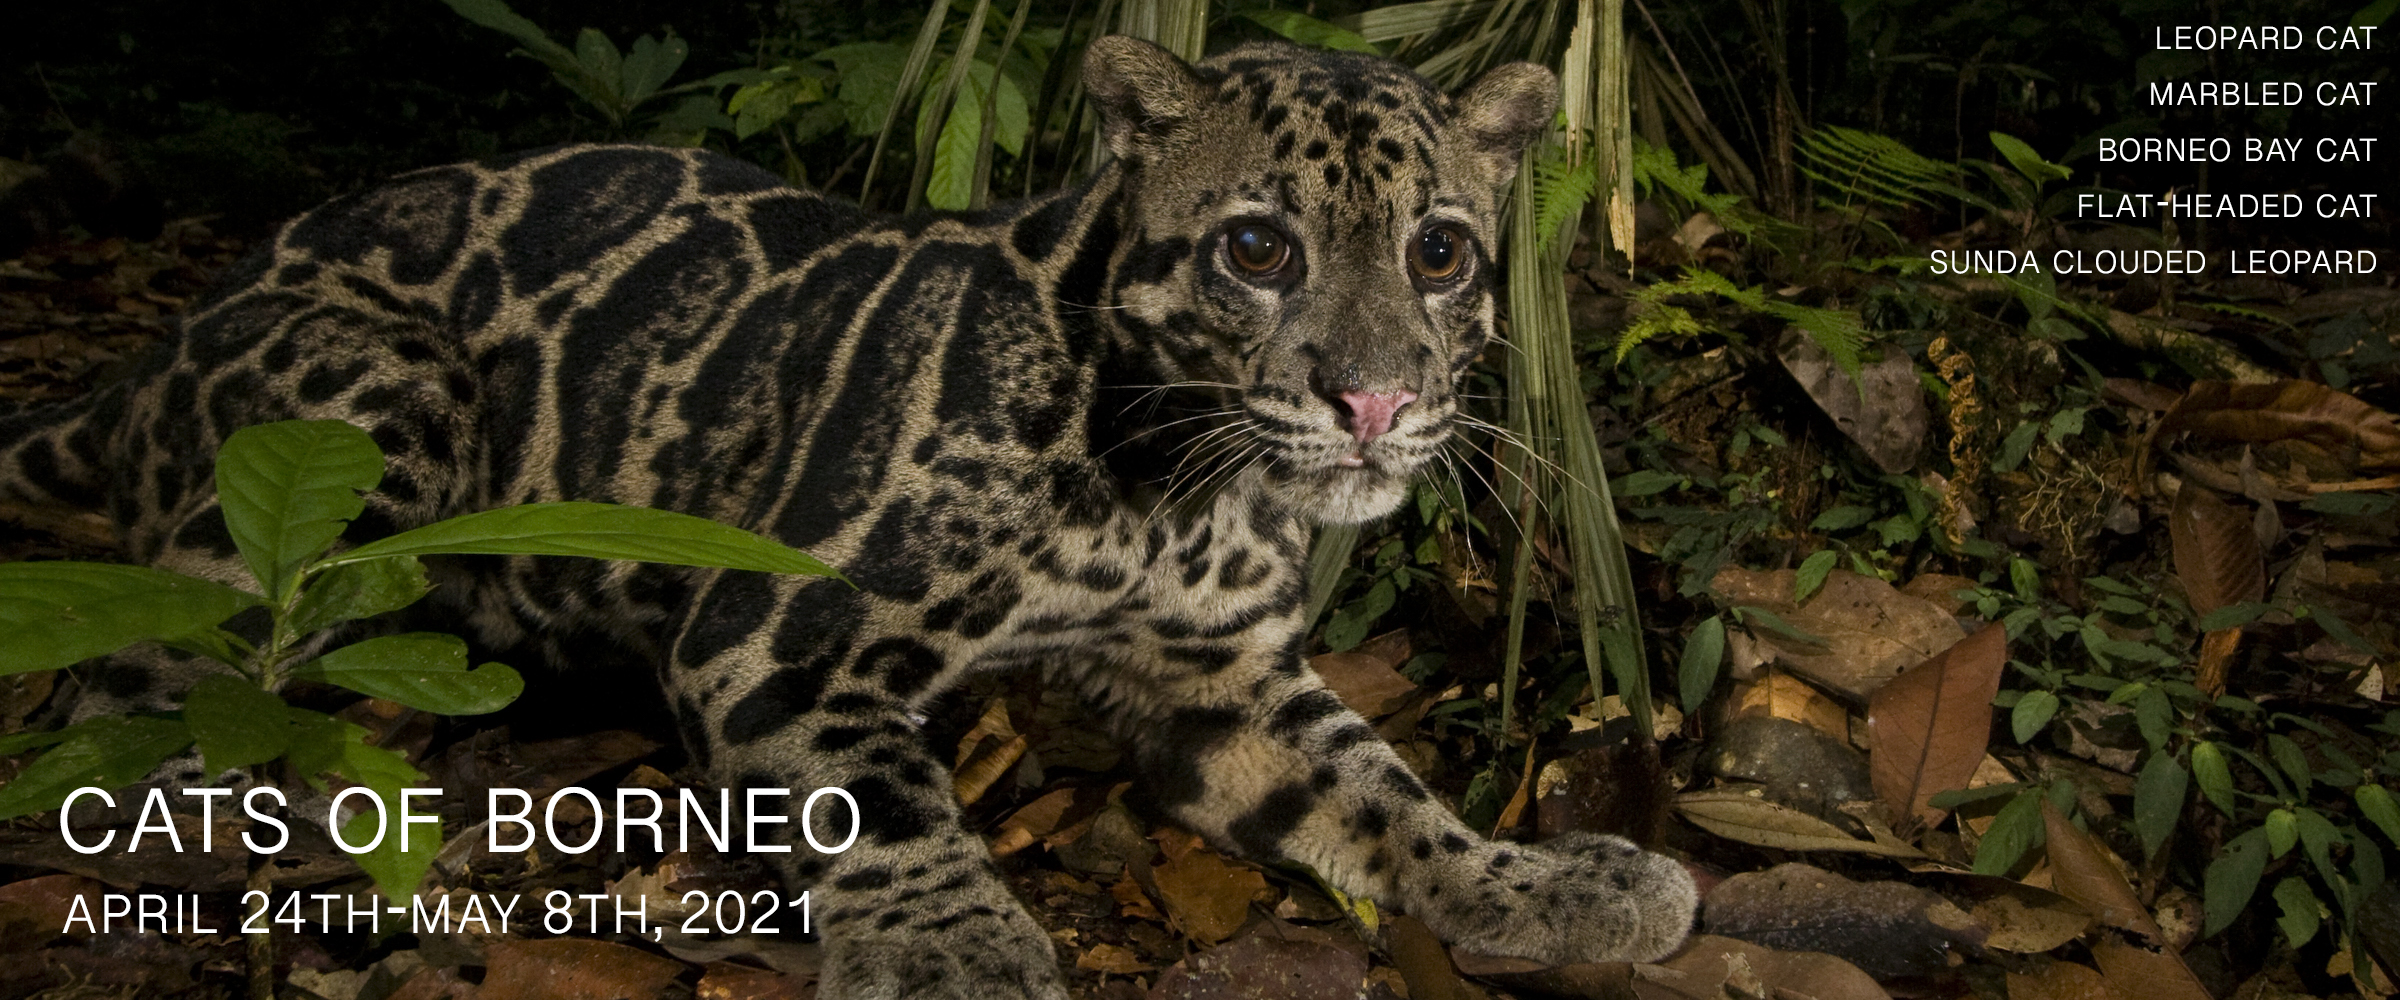 Cats of Borneo Photo Tour 2021